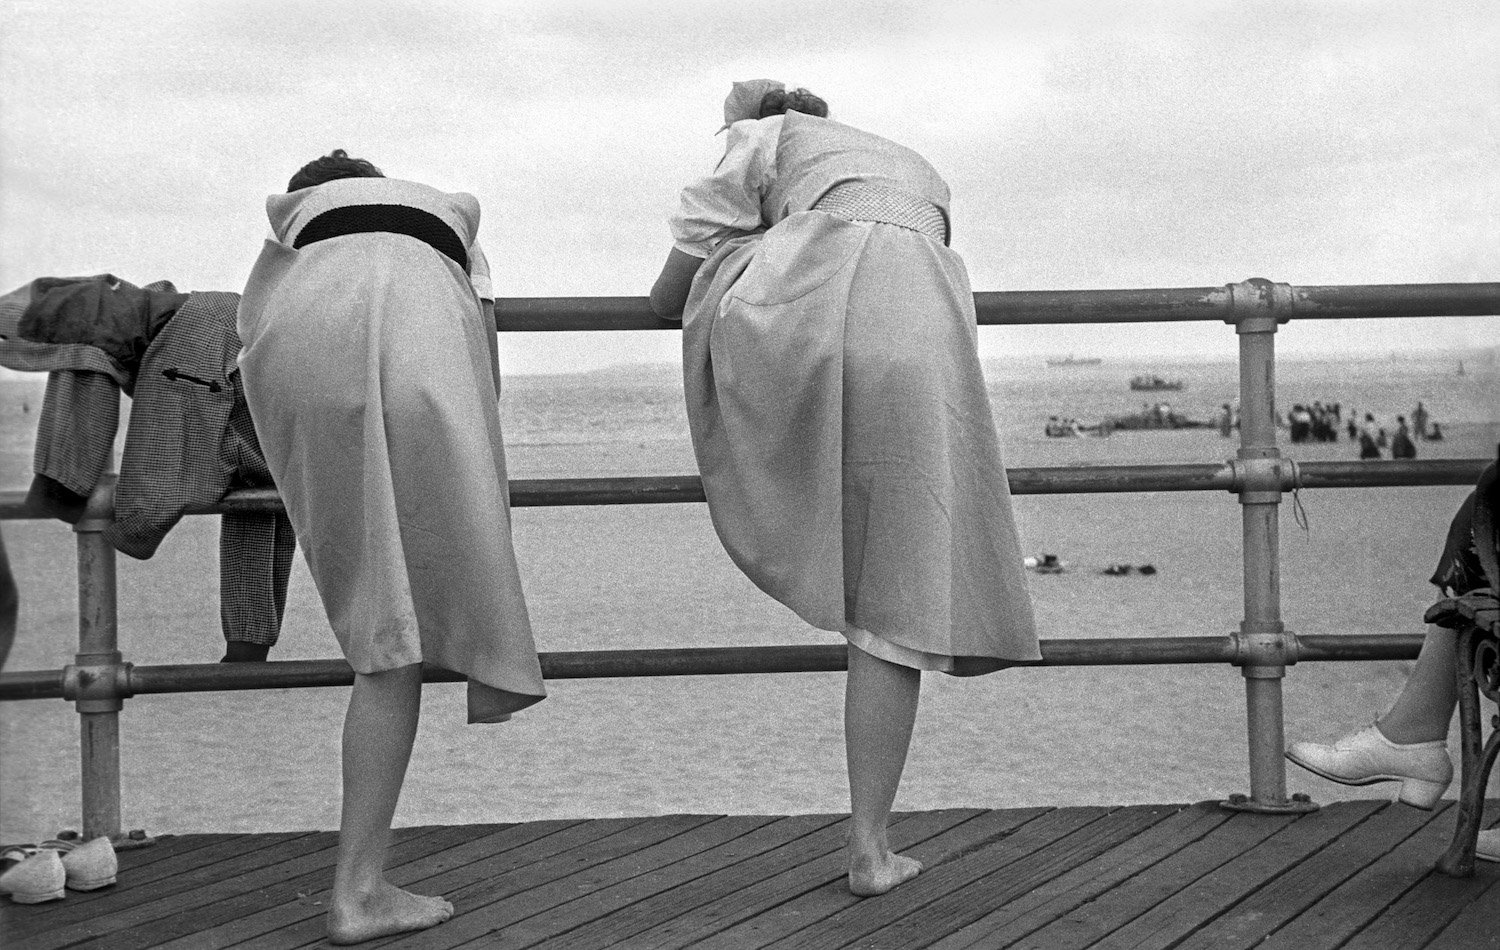 HAROLD FEINSTEIN, DEGAS CONEY ISLAND, 1950, COURTESY BIGAIGNON